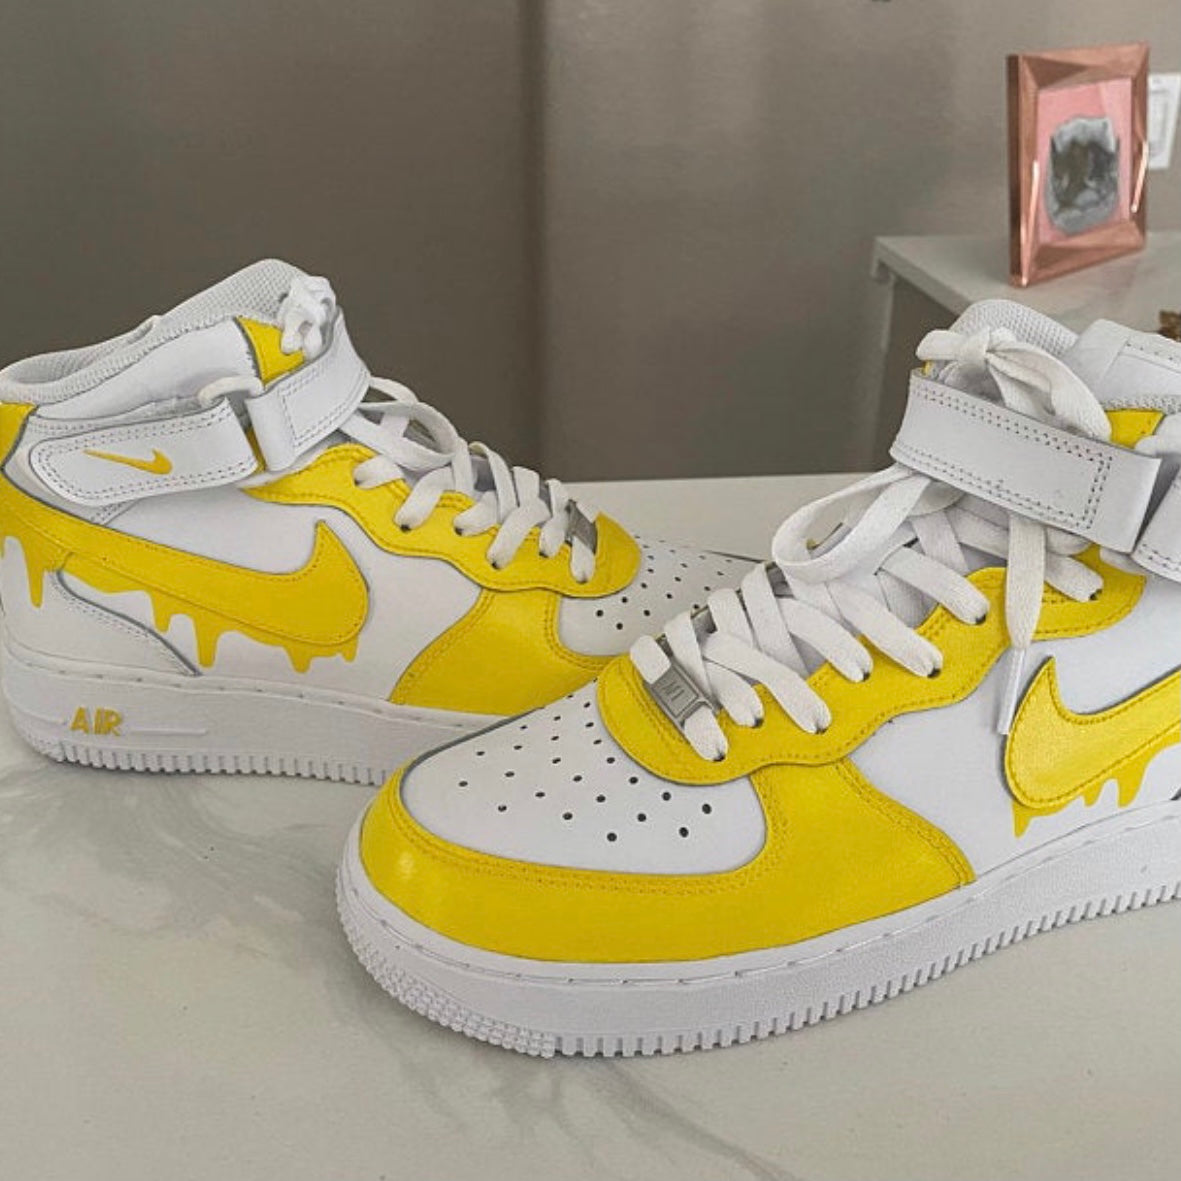 Neon Yellow Air Force 1 | Custom Handpainted Sneakers